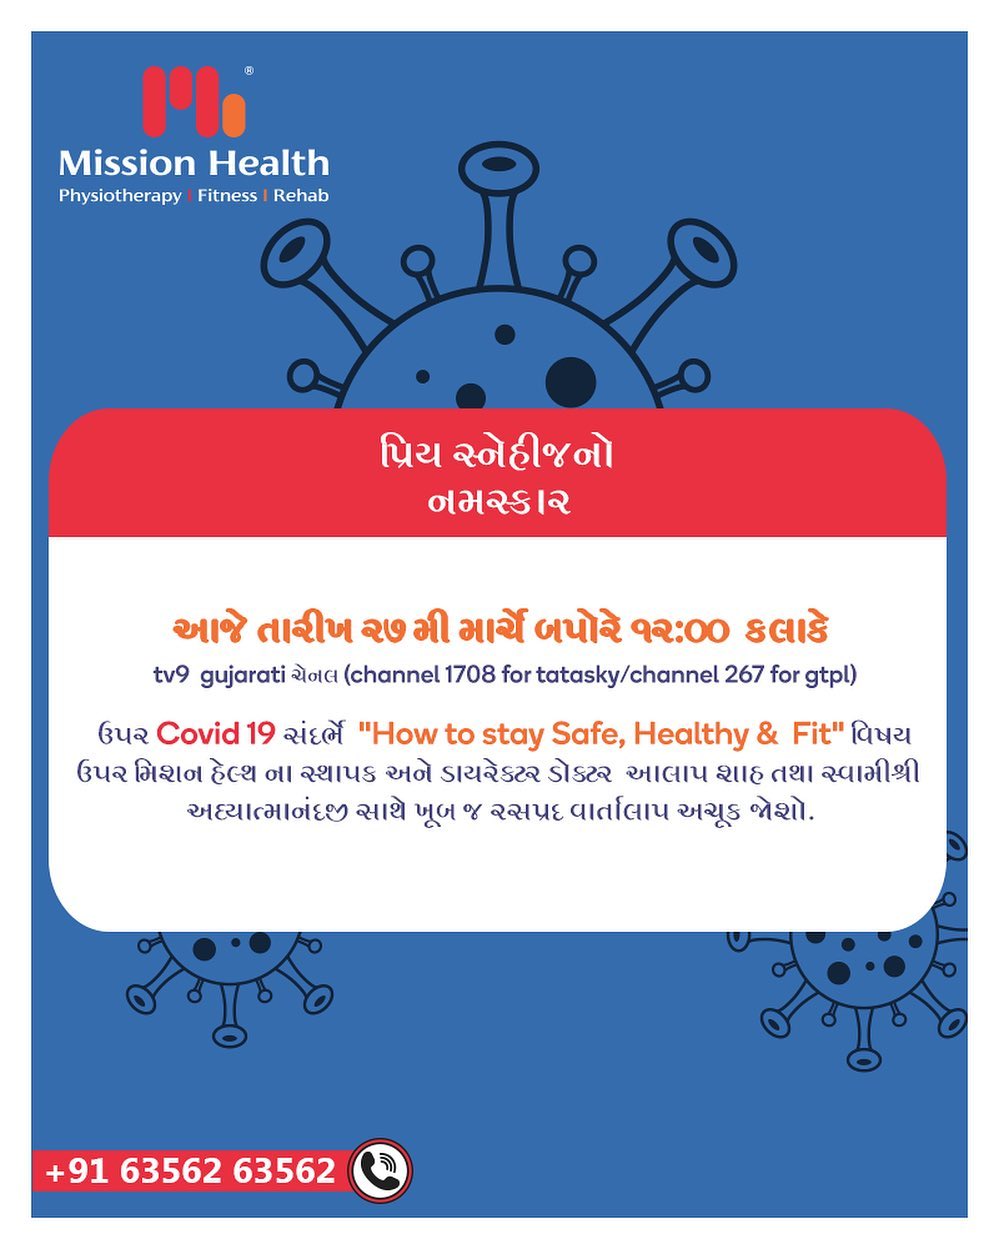 Stay Tuned to Fine-tune your Health & Fitness

#IndiaFightsCorona #Coronavirus #MissionHealth #MissionHealthIndia #MovementIsLife